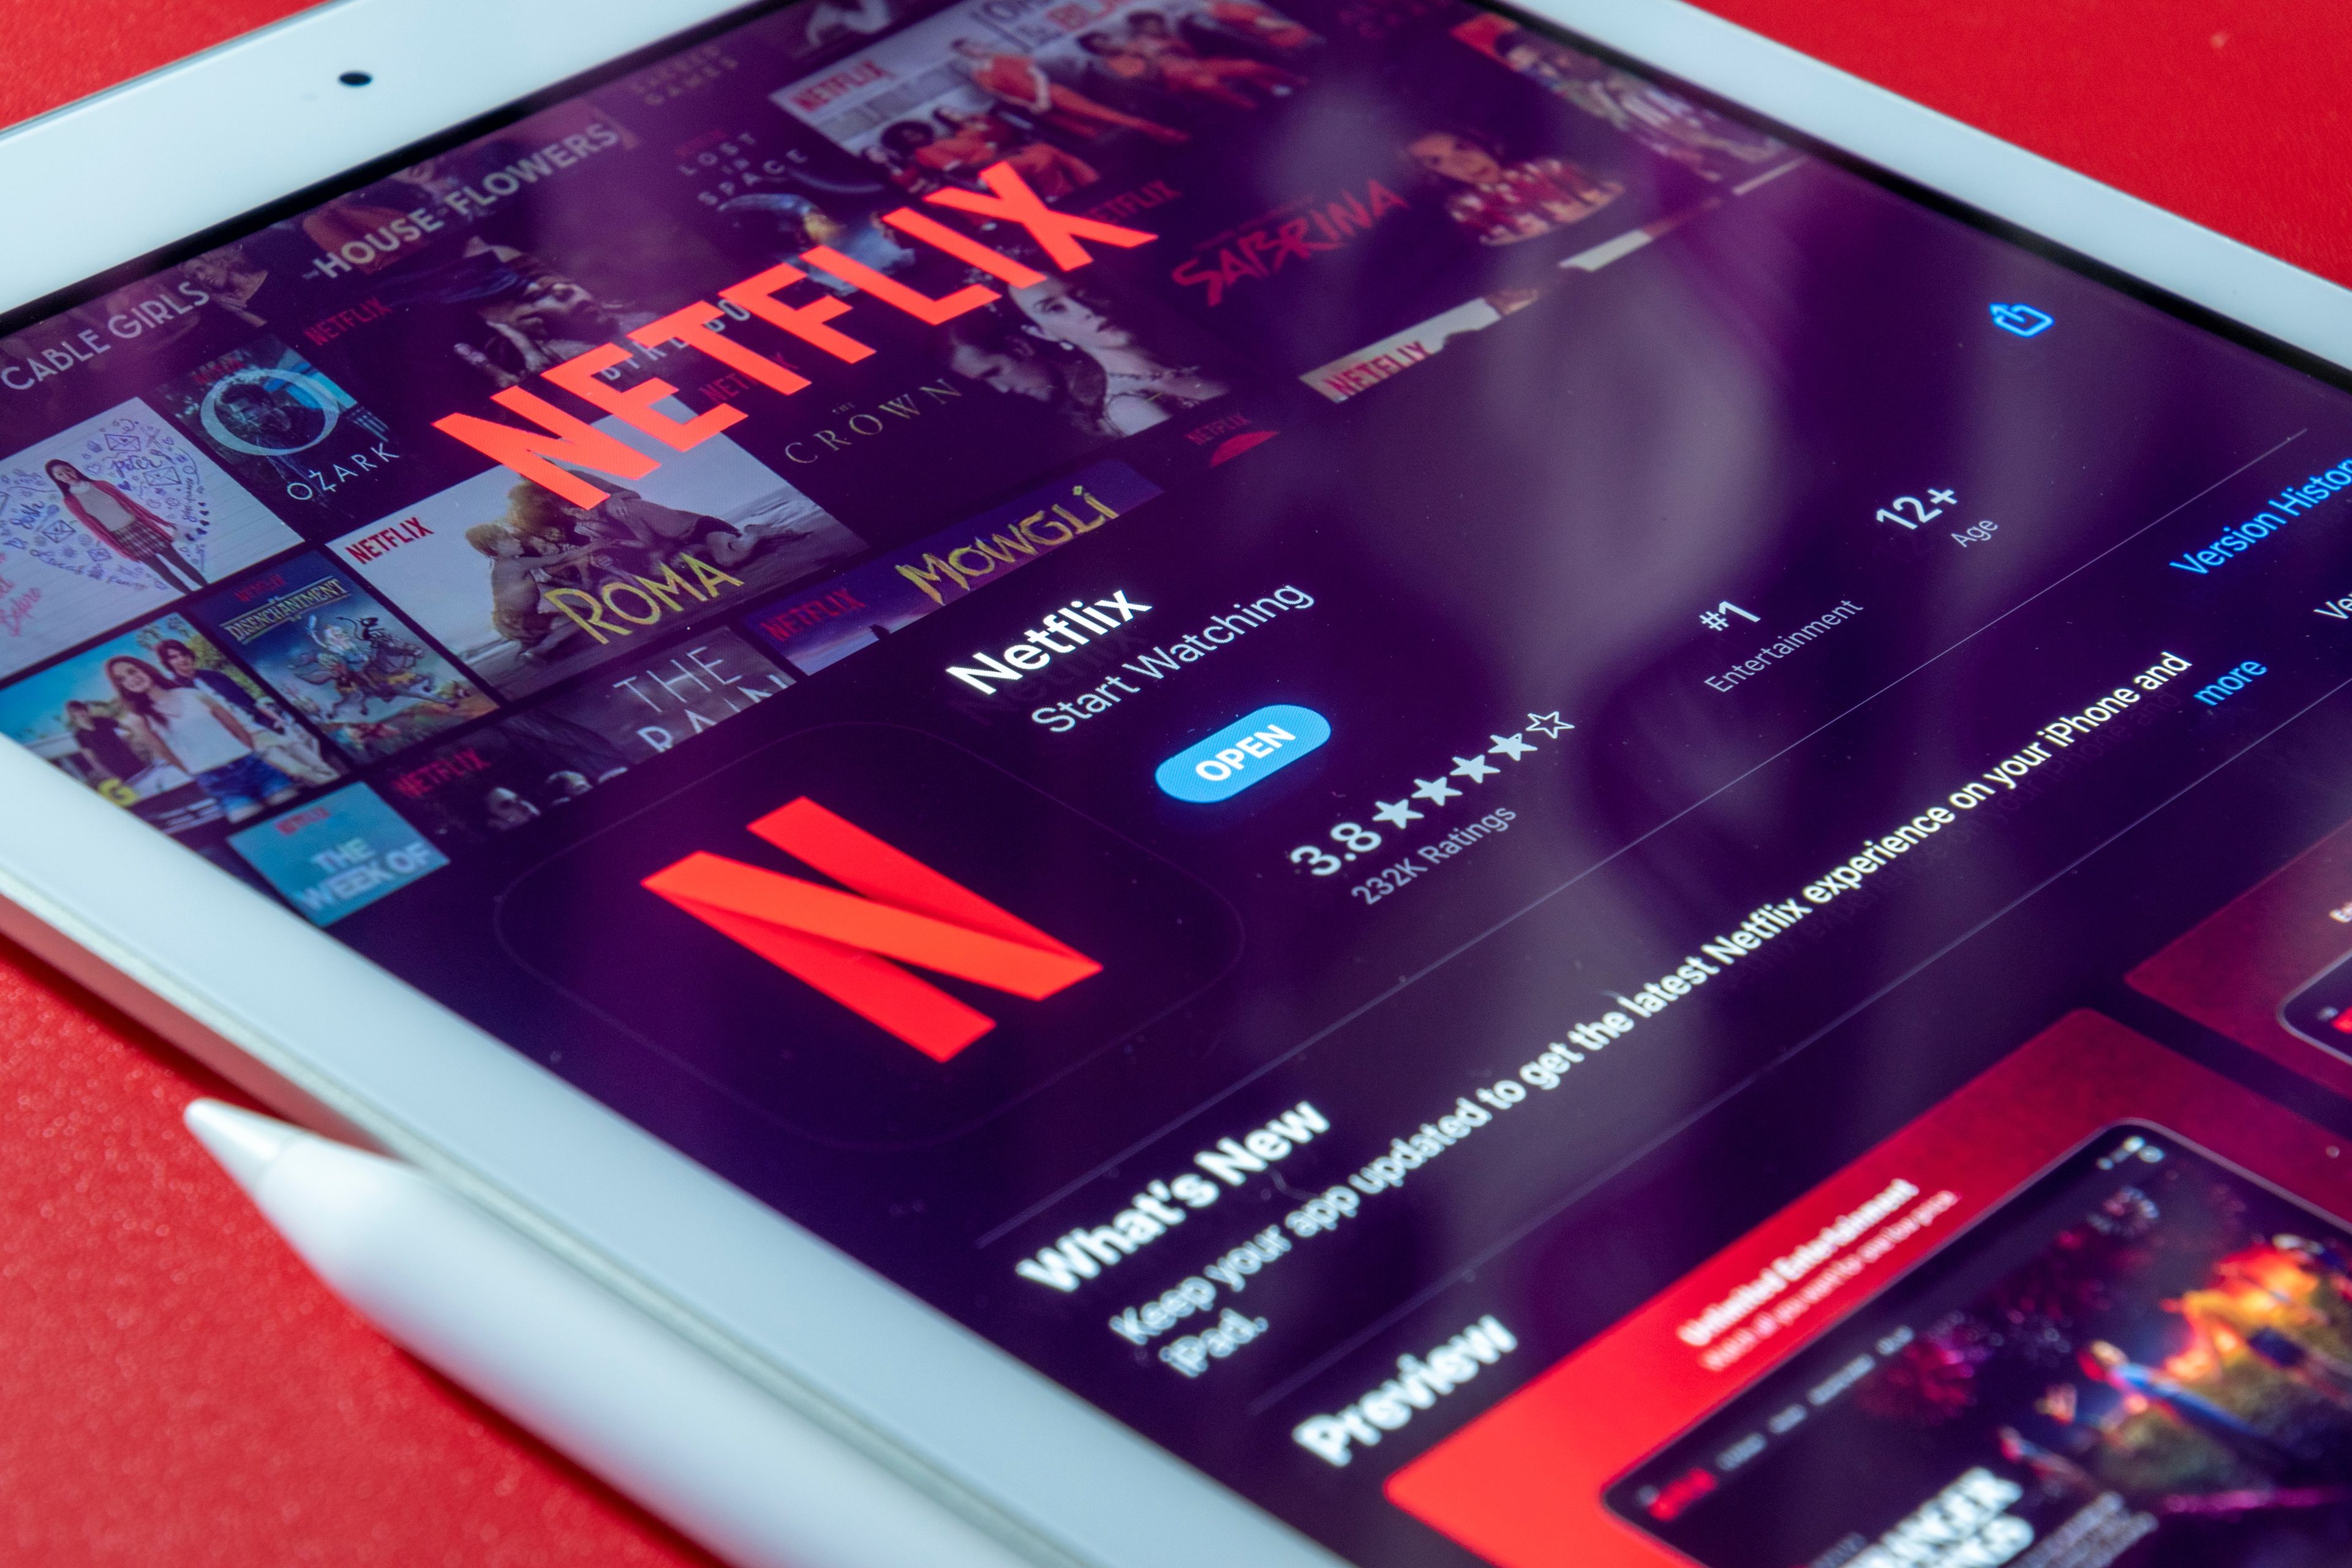 La app de Netflix en una tablet